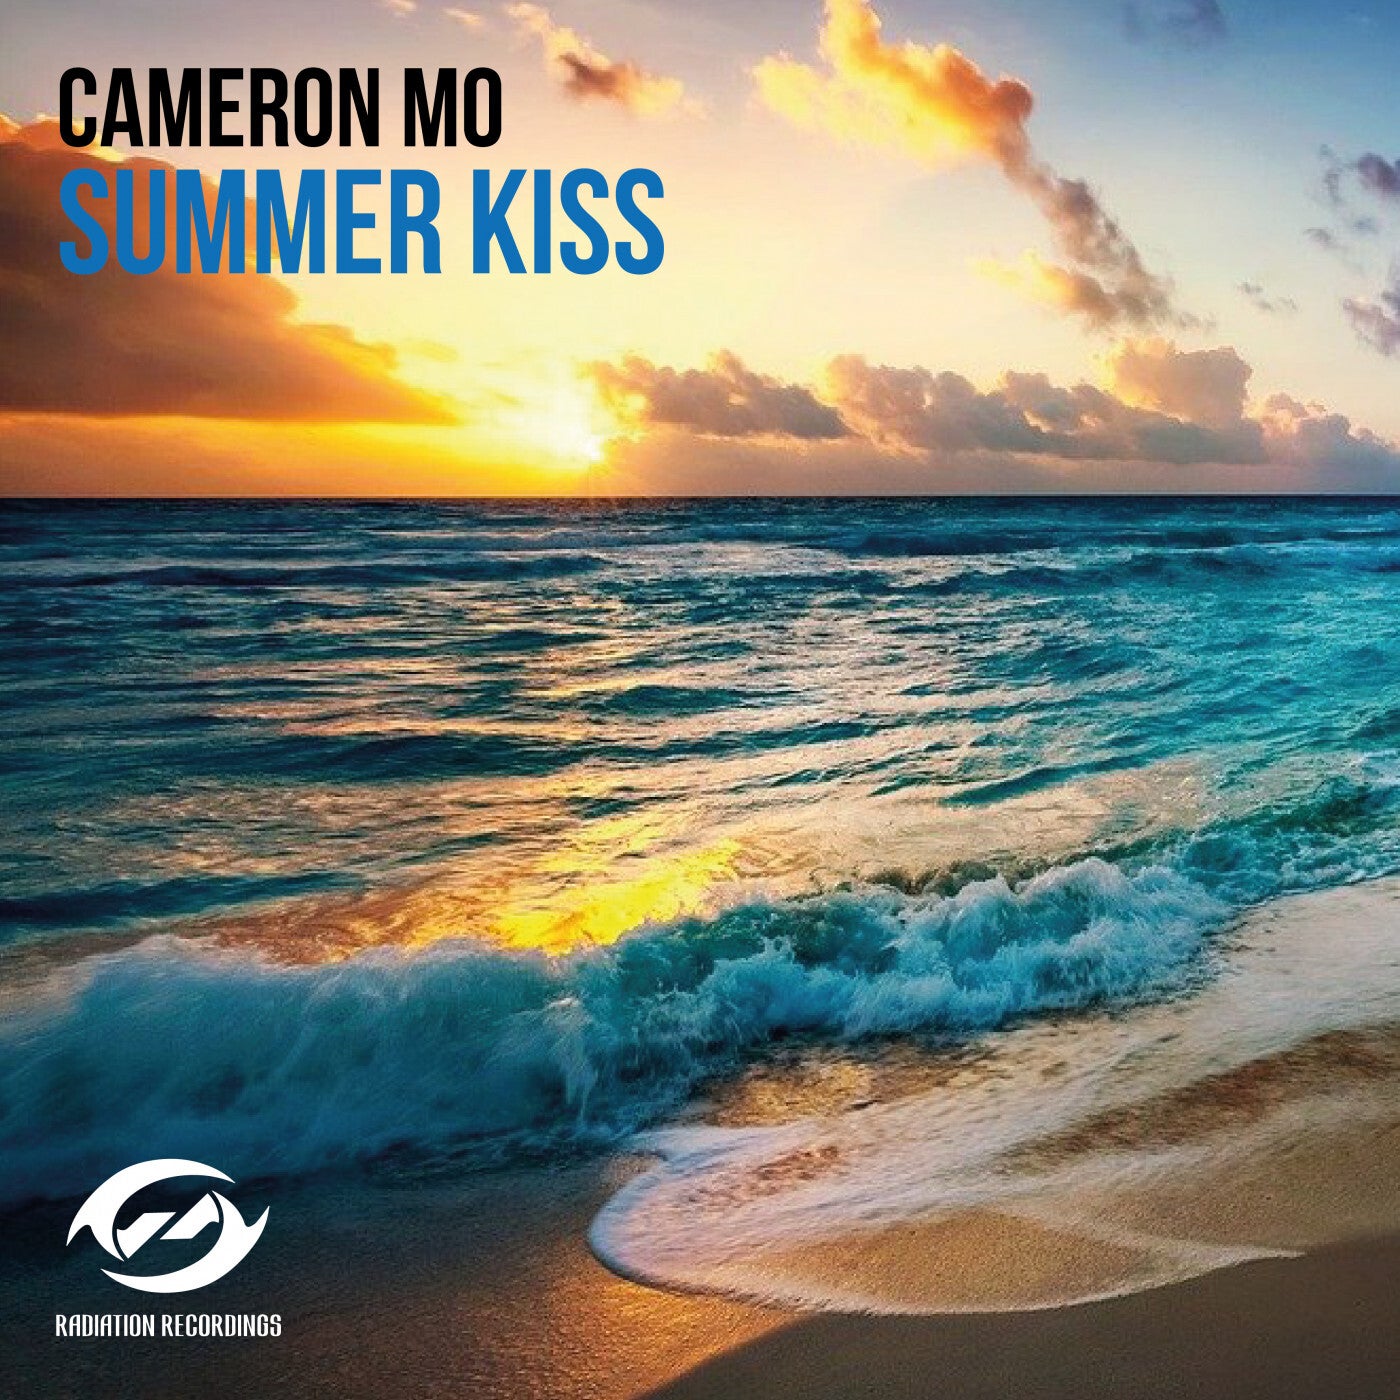 Good mo Summer. Summer kiss